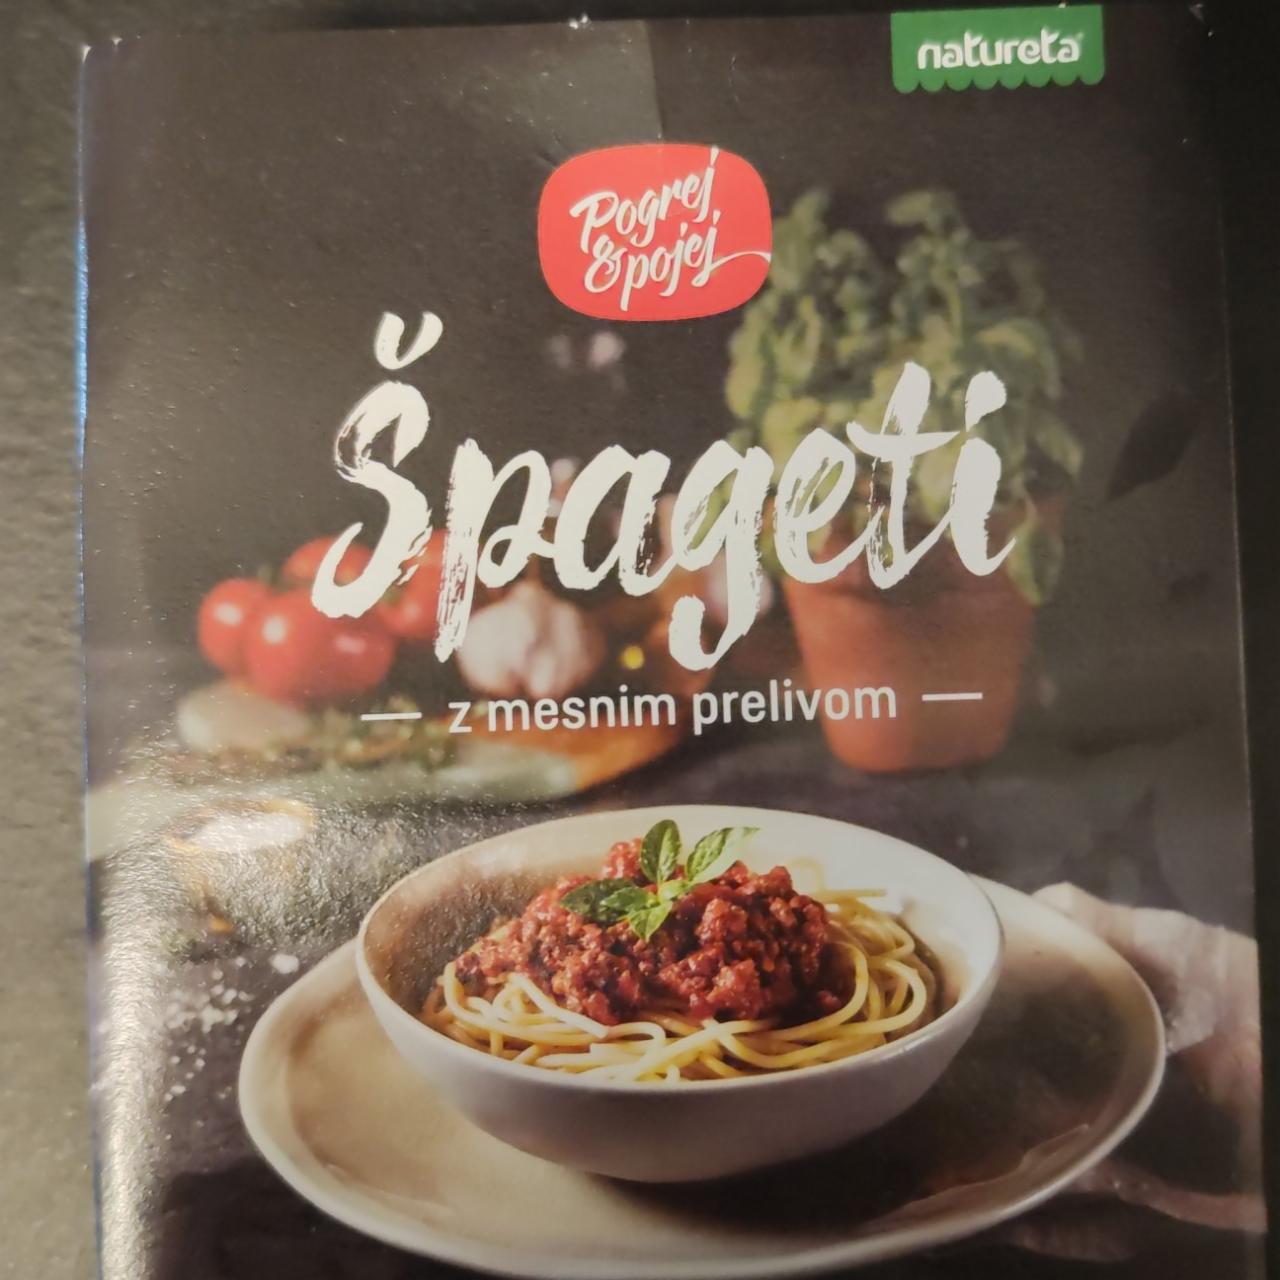 Zdjęcia - Špageti z mesnim prelivom Pogrej & pojej